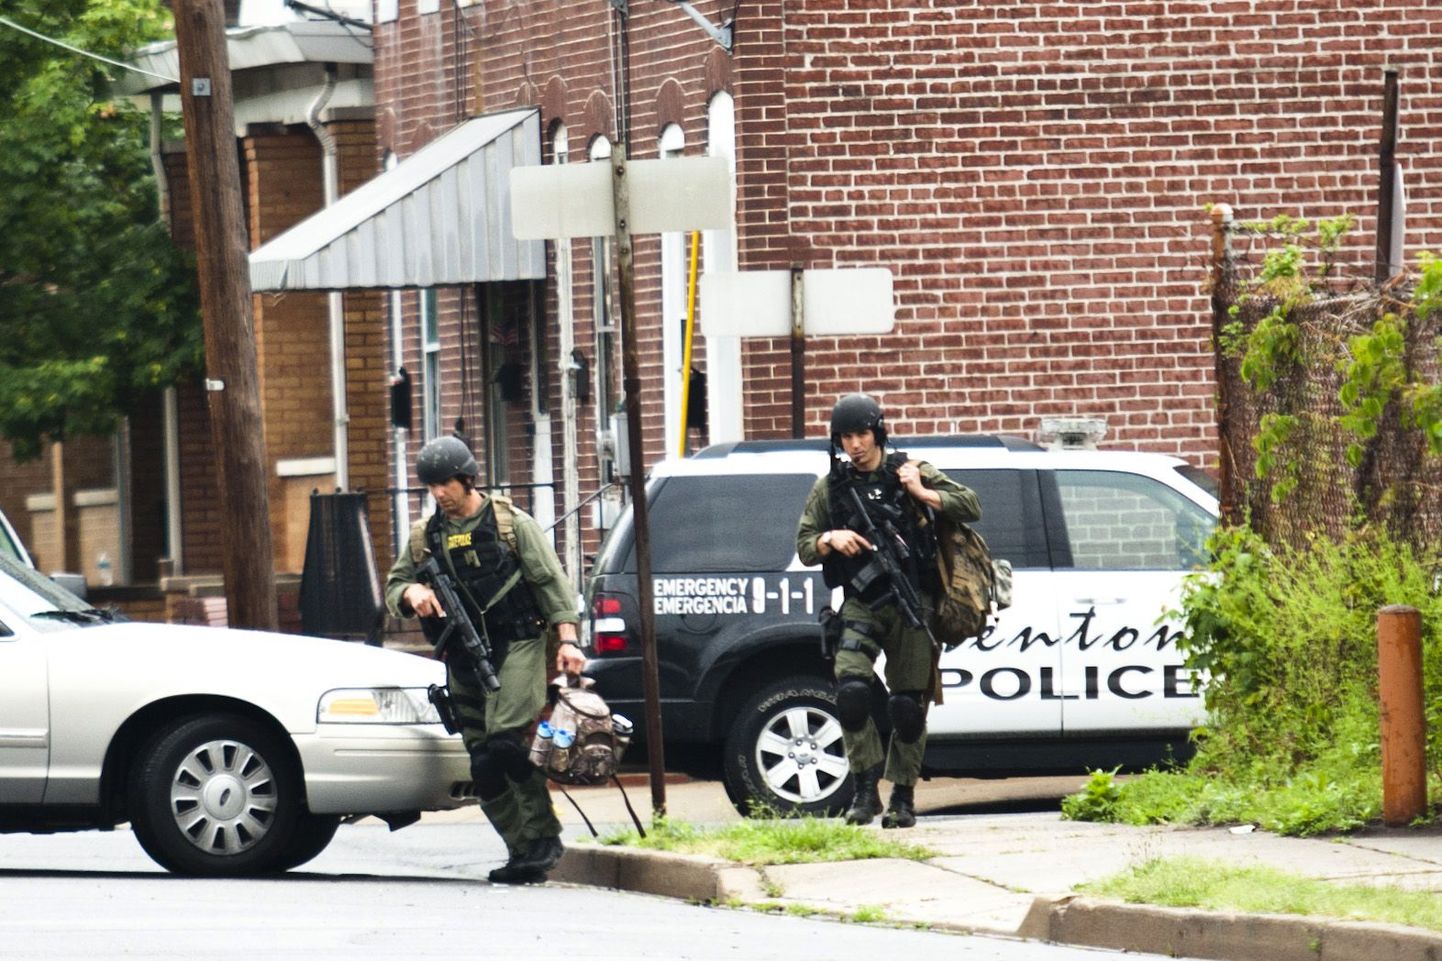 Politsei taktikalise eriüksuse (SWAT) liikmed Trentonis (New Jersey osariik).